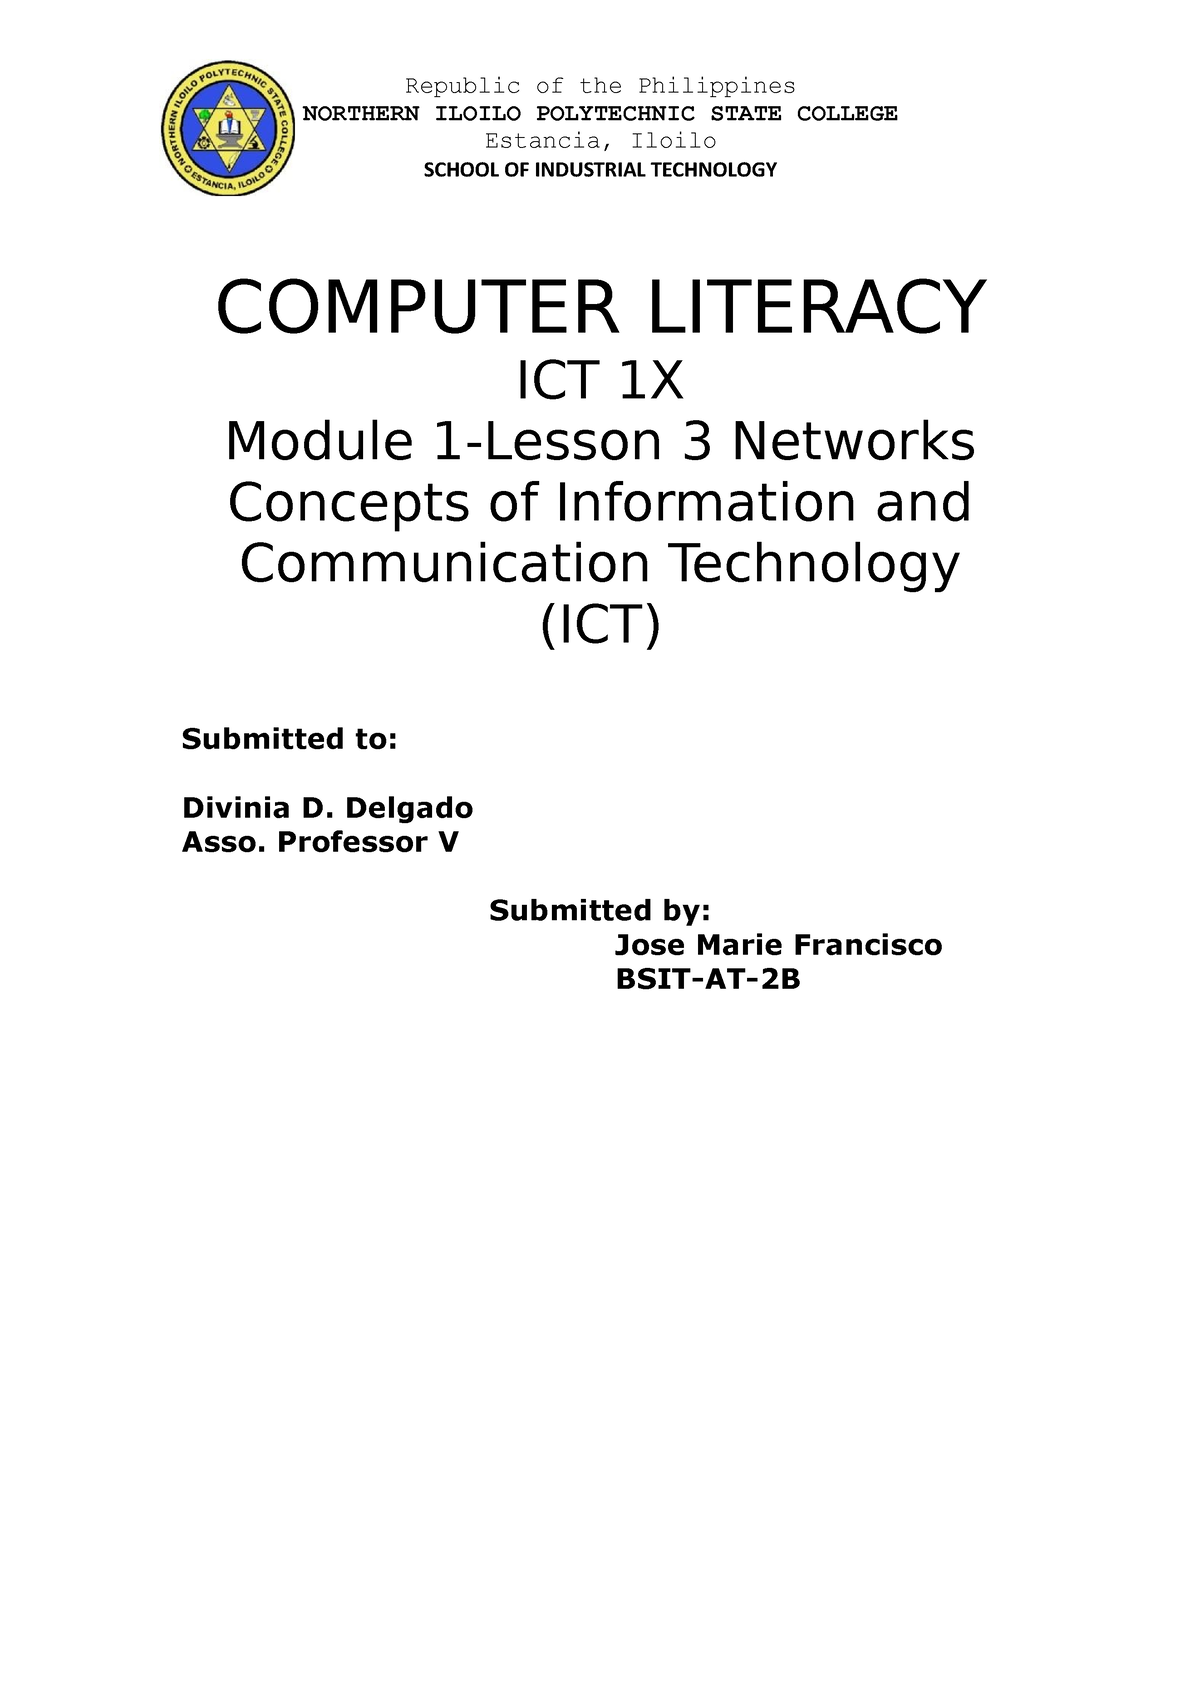 ICT- Lesson-3 - dasdas - Information Communication Technology - Studocu